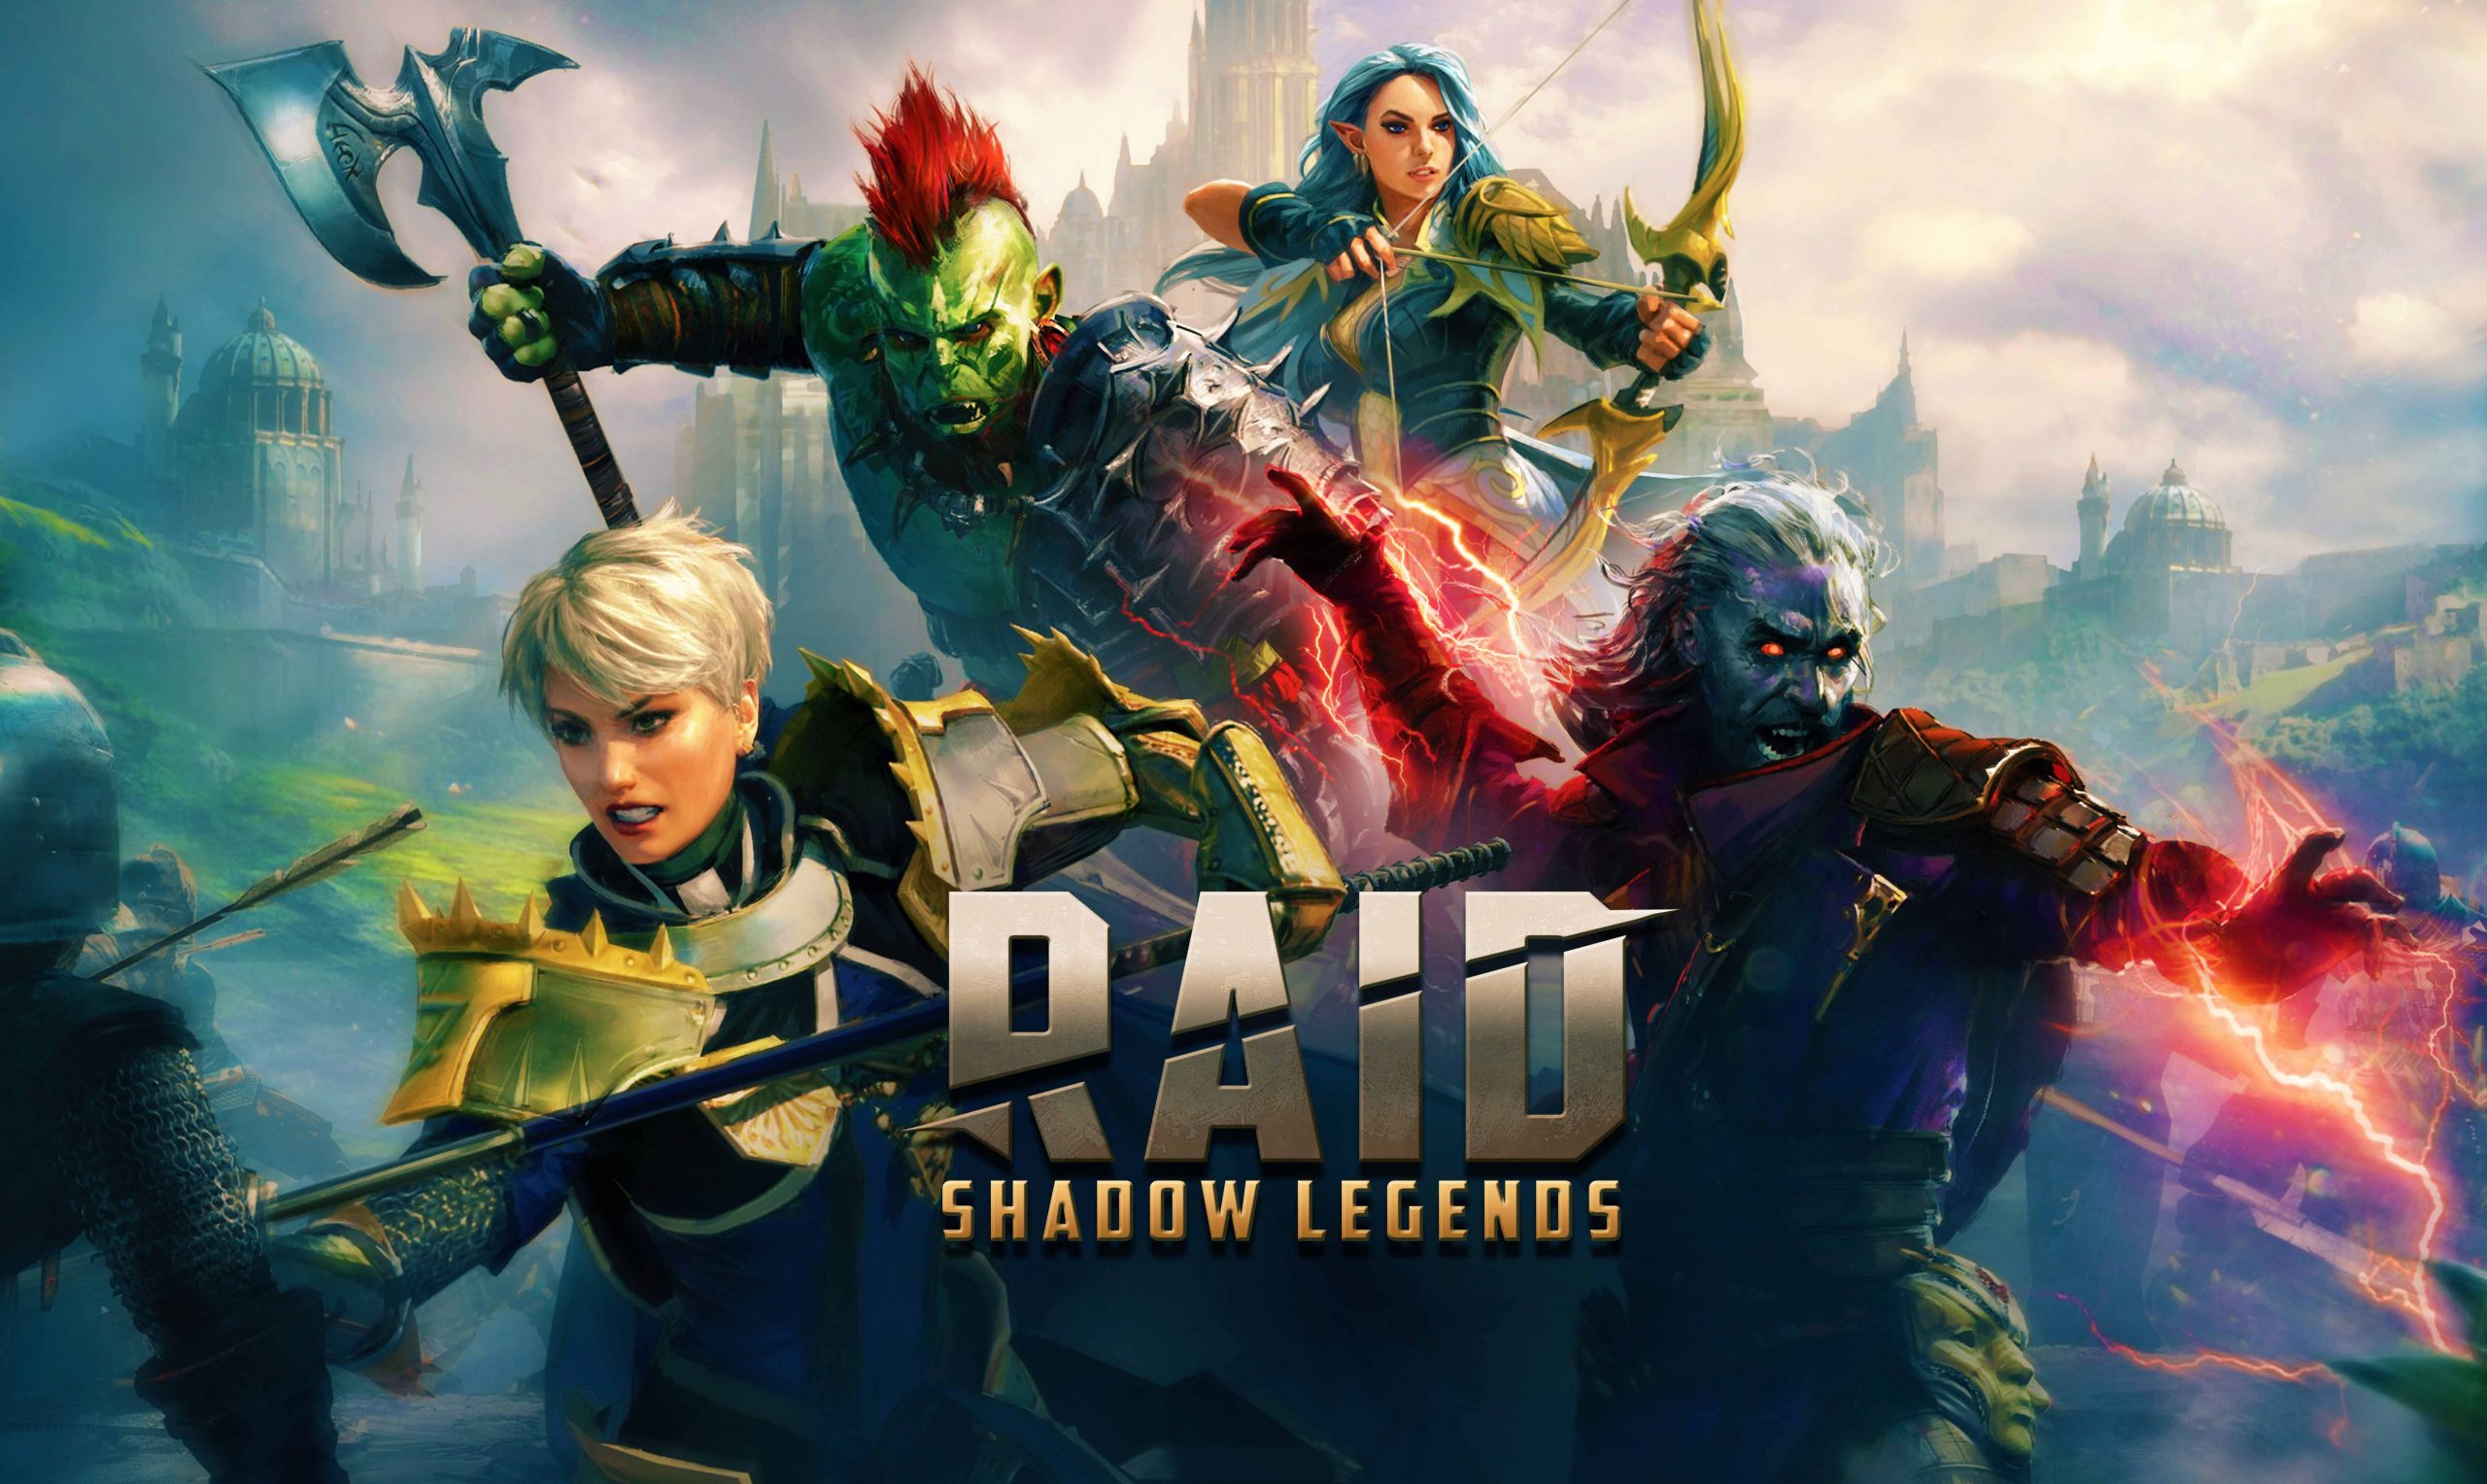 have you heard of raid shadow legends script